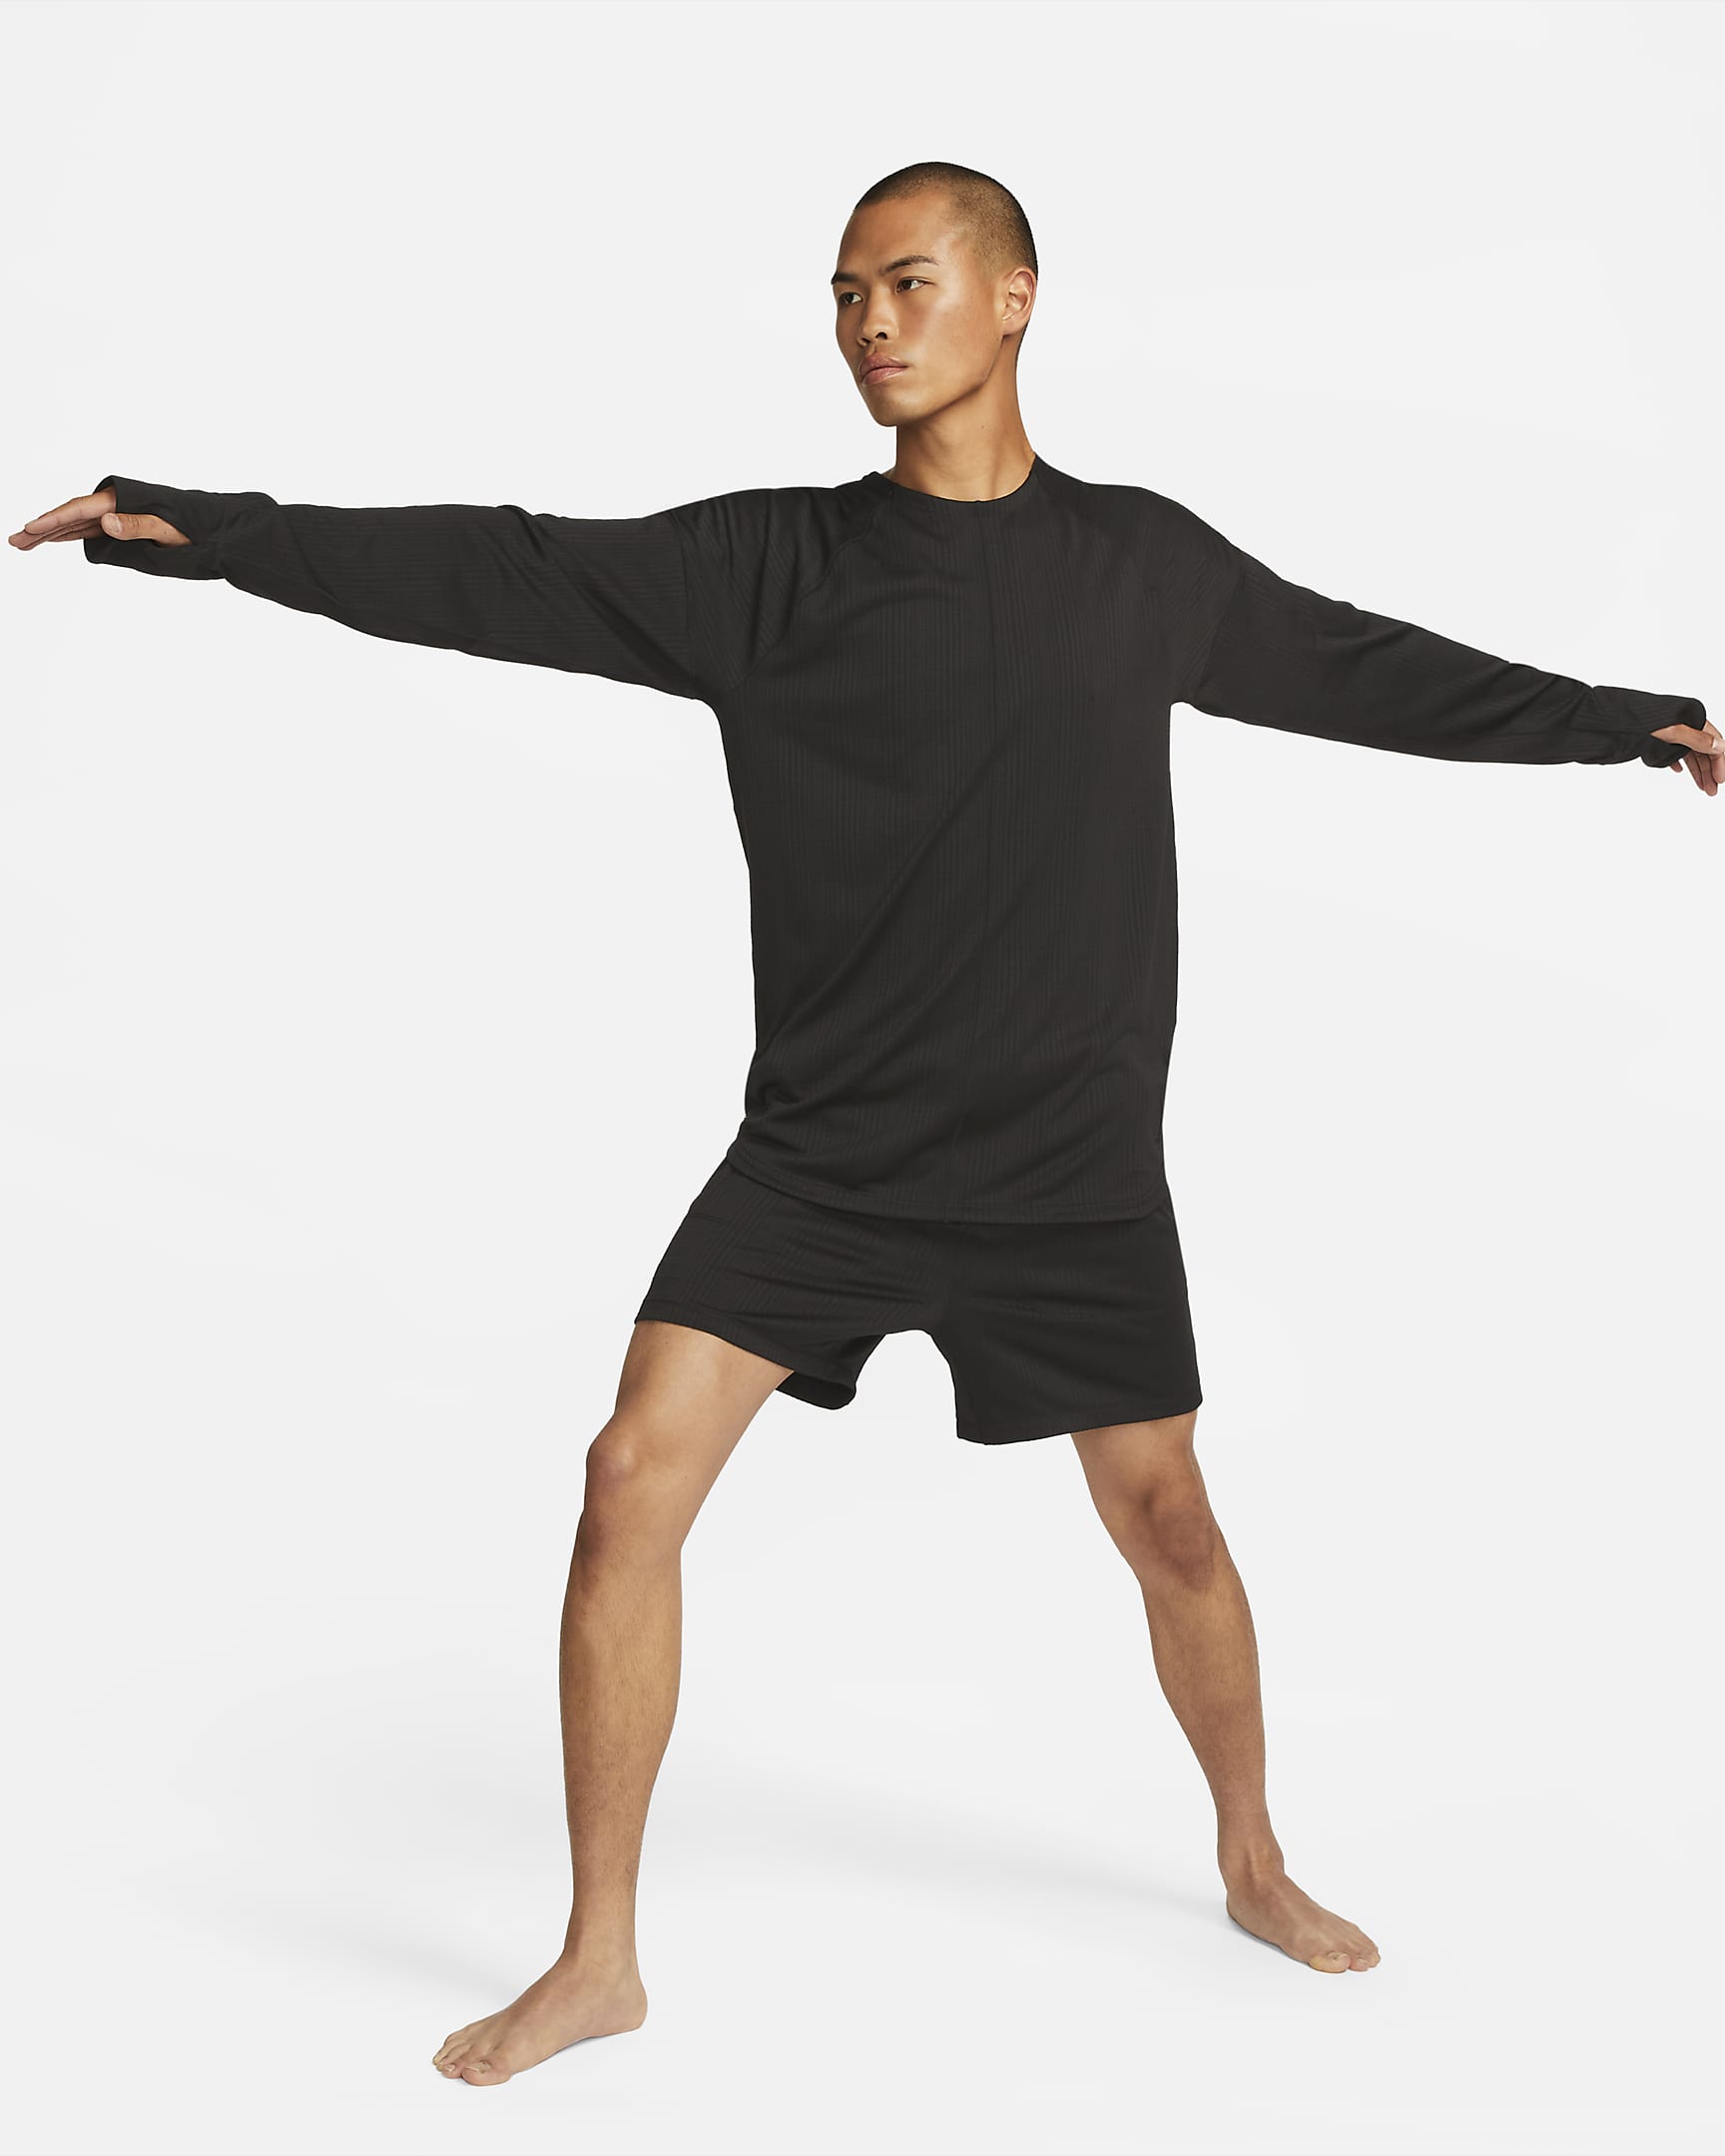 Nike Yoga Men's Dri-FIT Crew Top - Black/Black